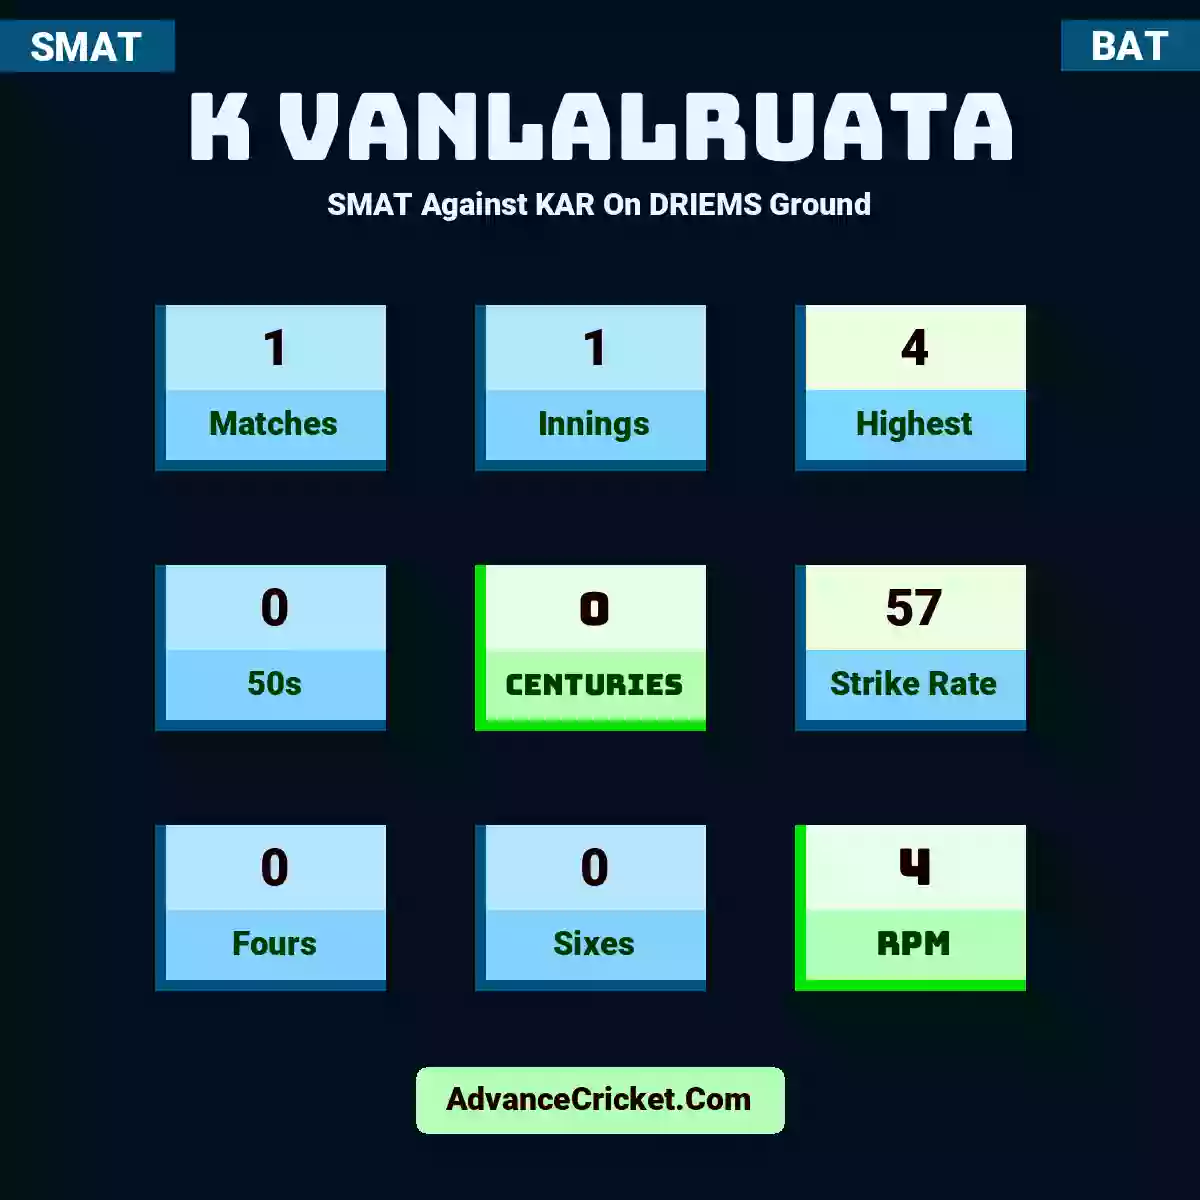 K Vanlalruata SMAT  Against KAR On DRIEMS Ground, K Vanlalruata played 1 matches, scored 4 runs as highest, 0 half-centuries, and 0 centuries, with a strike rate of 57. K.Vanlalruata hit 0 fours and 0 sixes, with an RPM of 4.